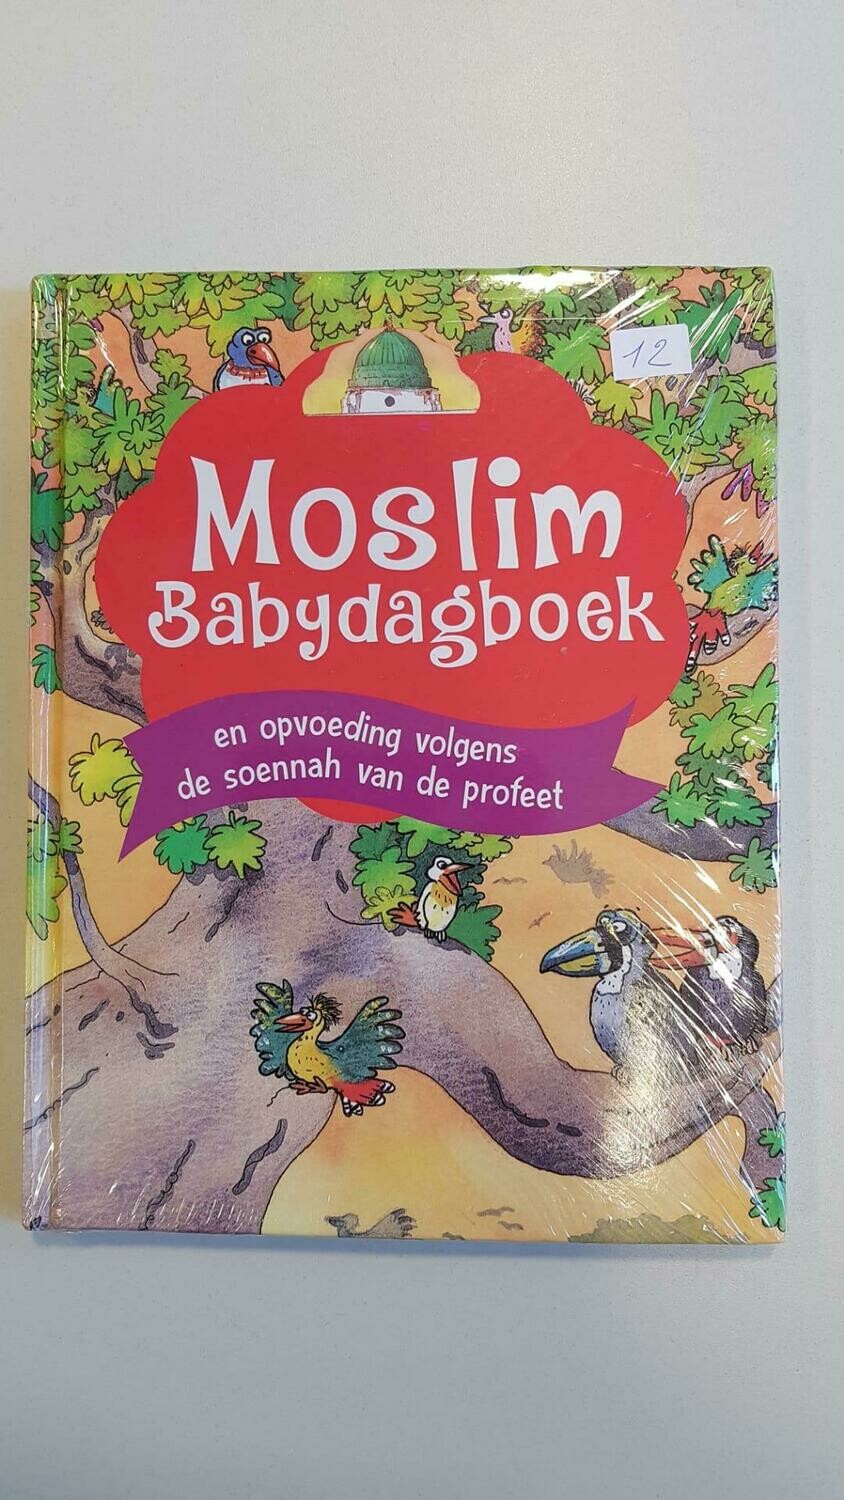 Moslim babydagboek